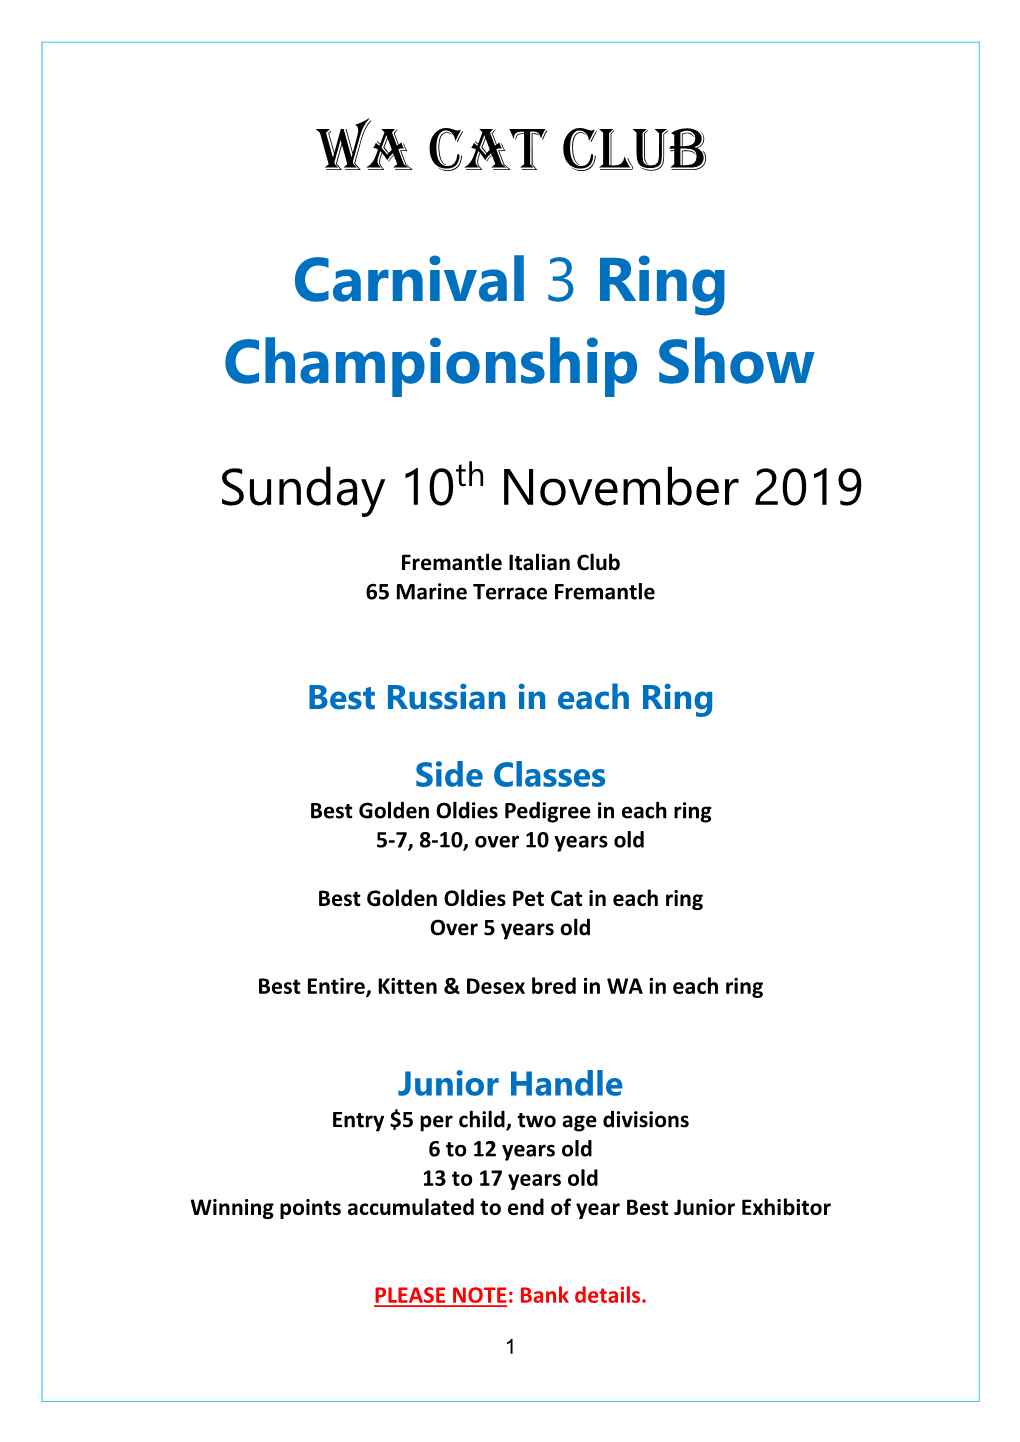 WA Cat Club Carnival 3 Ring Championship Show